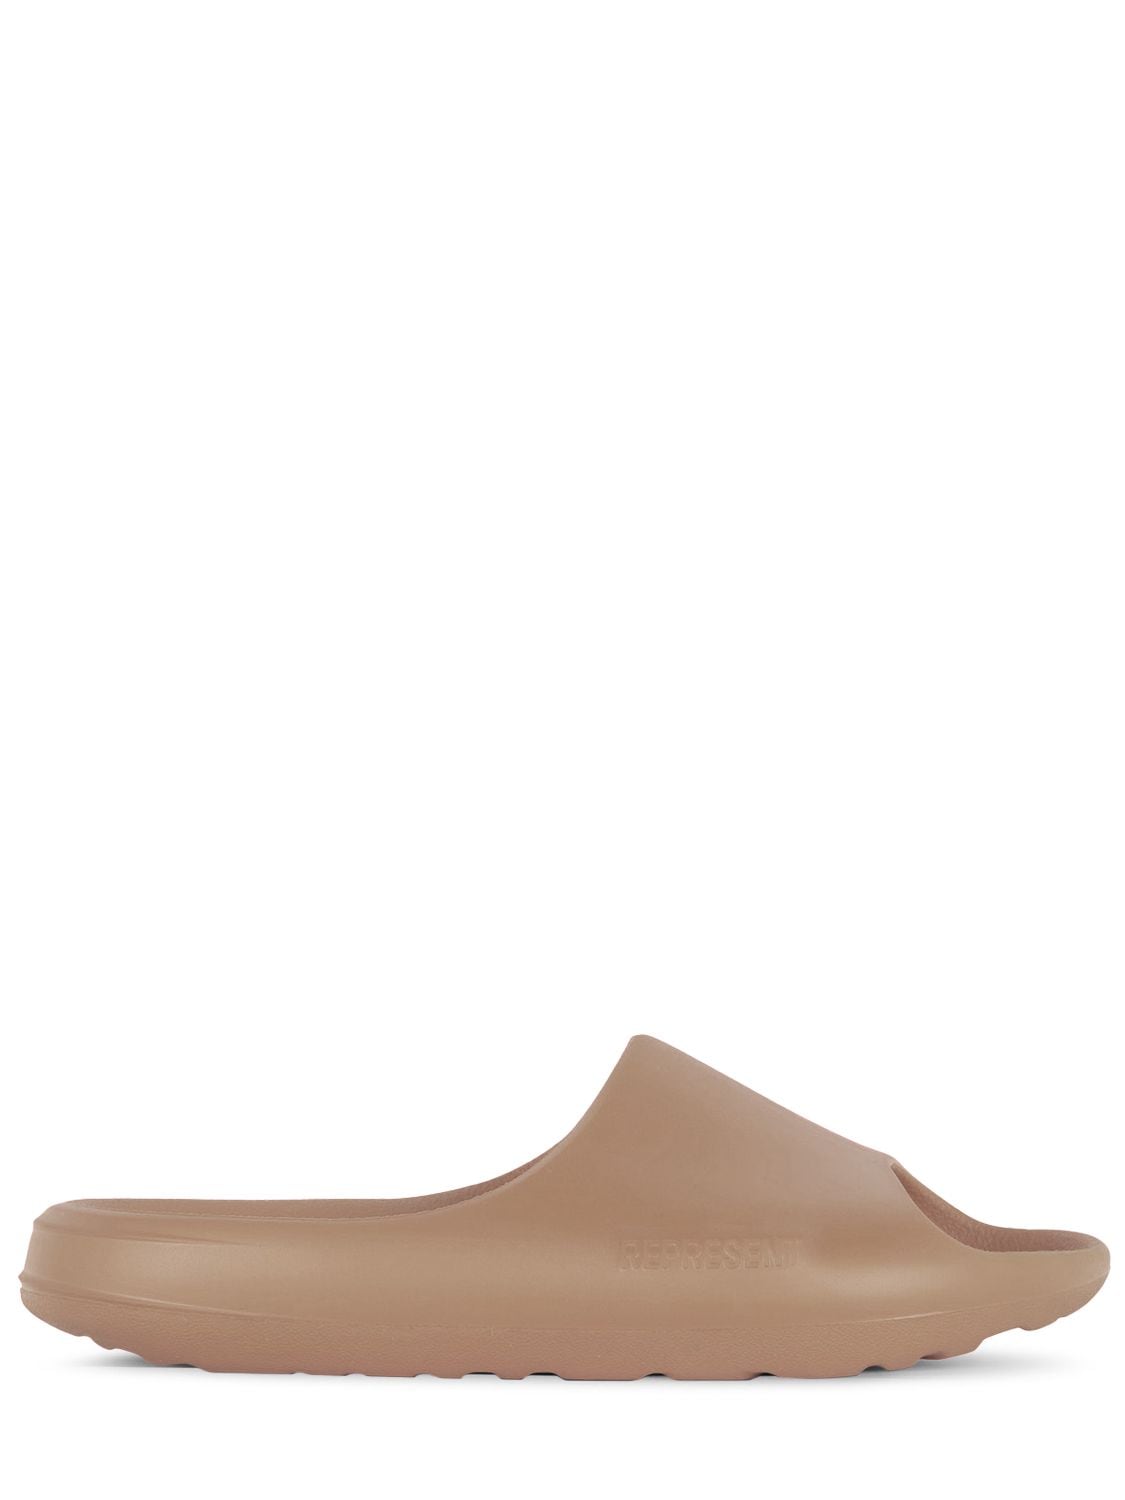 Represent Rubber Slide Sandals In Mushroom